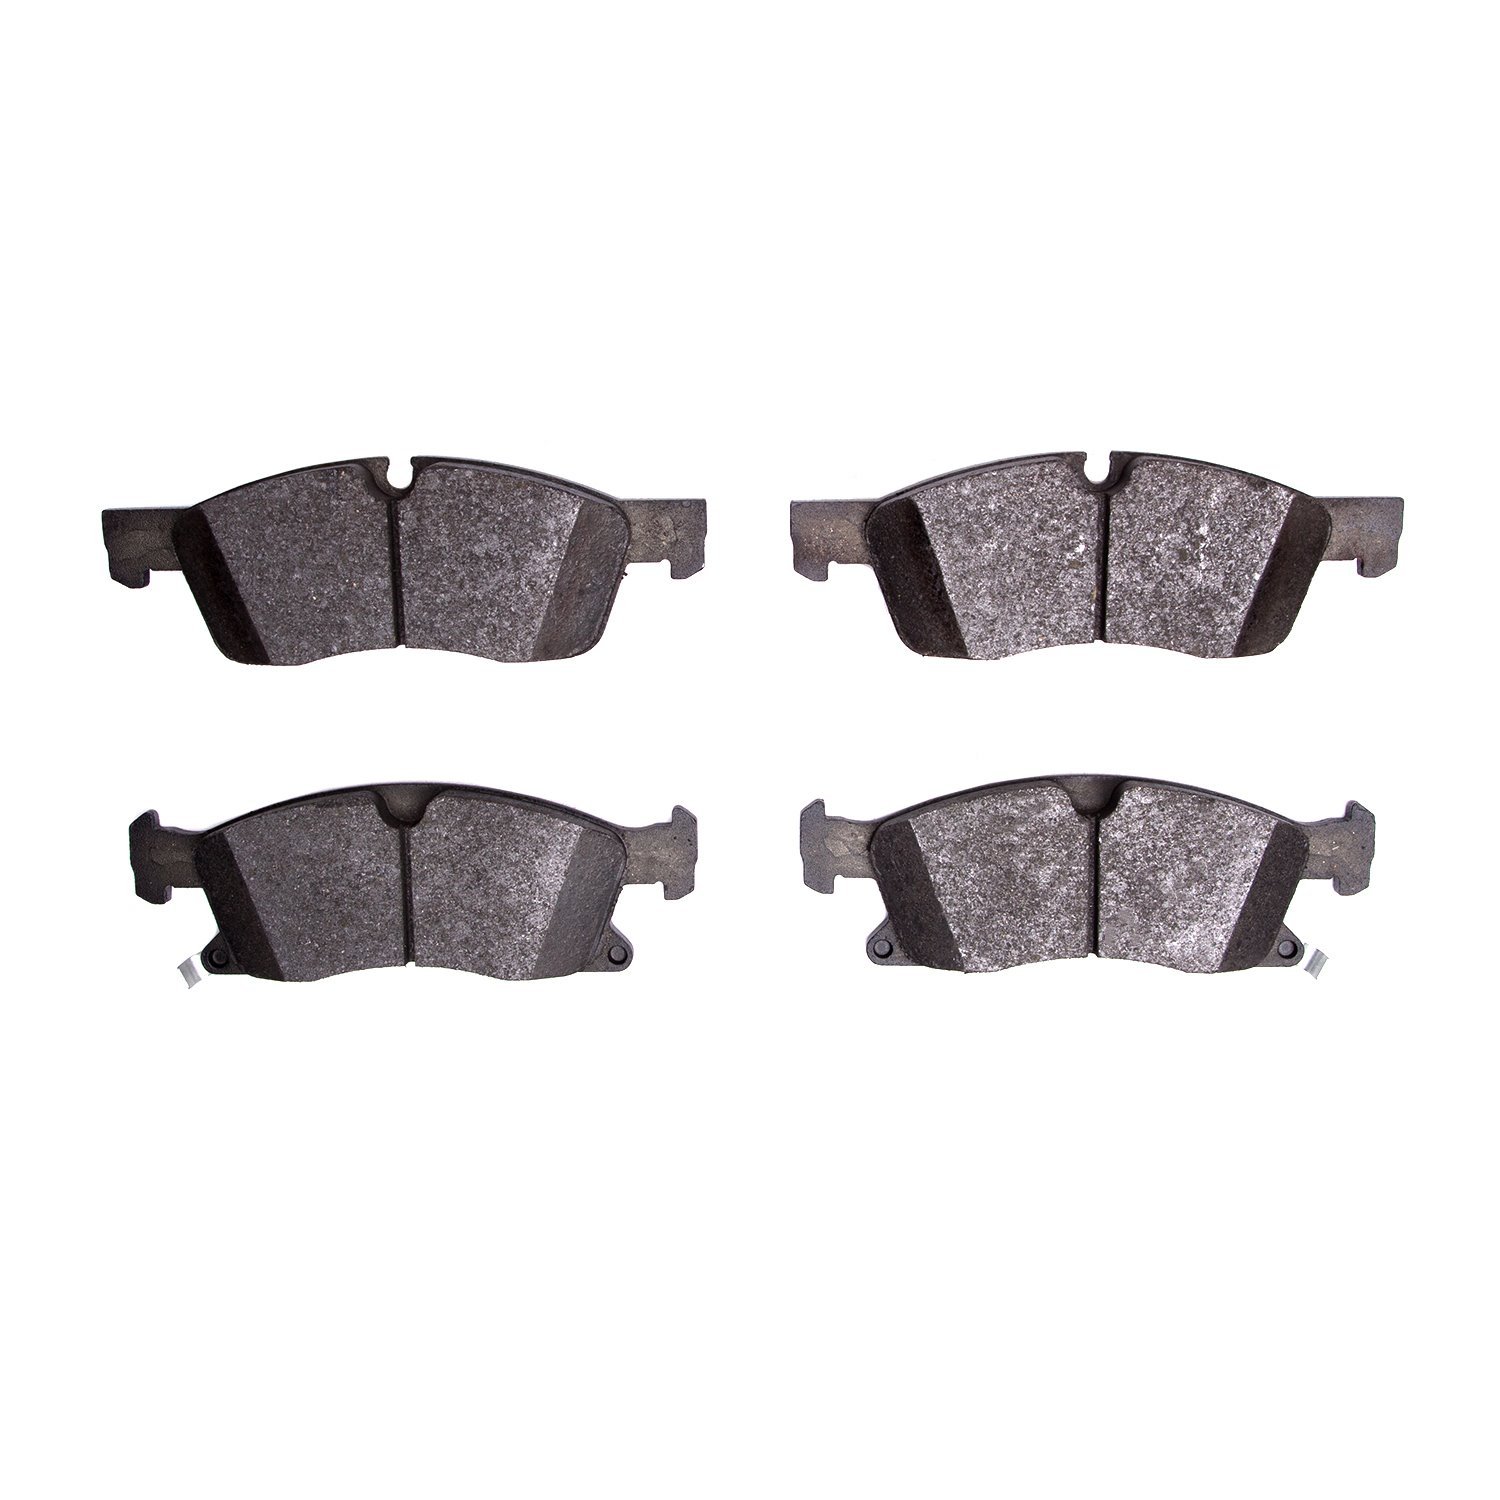 Euro Ceramic Brake Pads, Fits Select Mopar, Position: Front